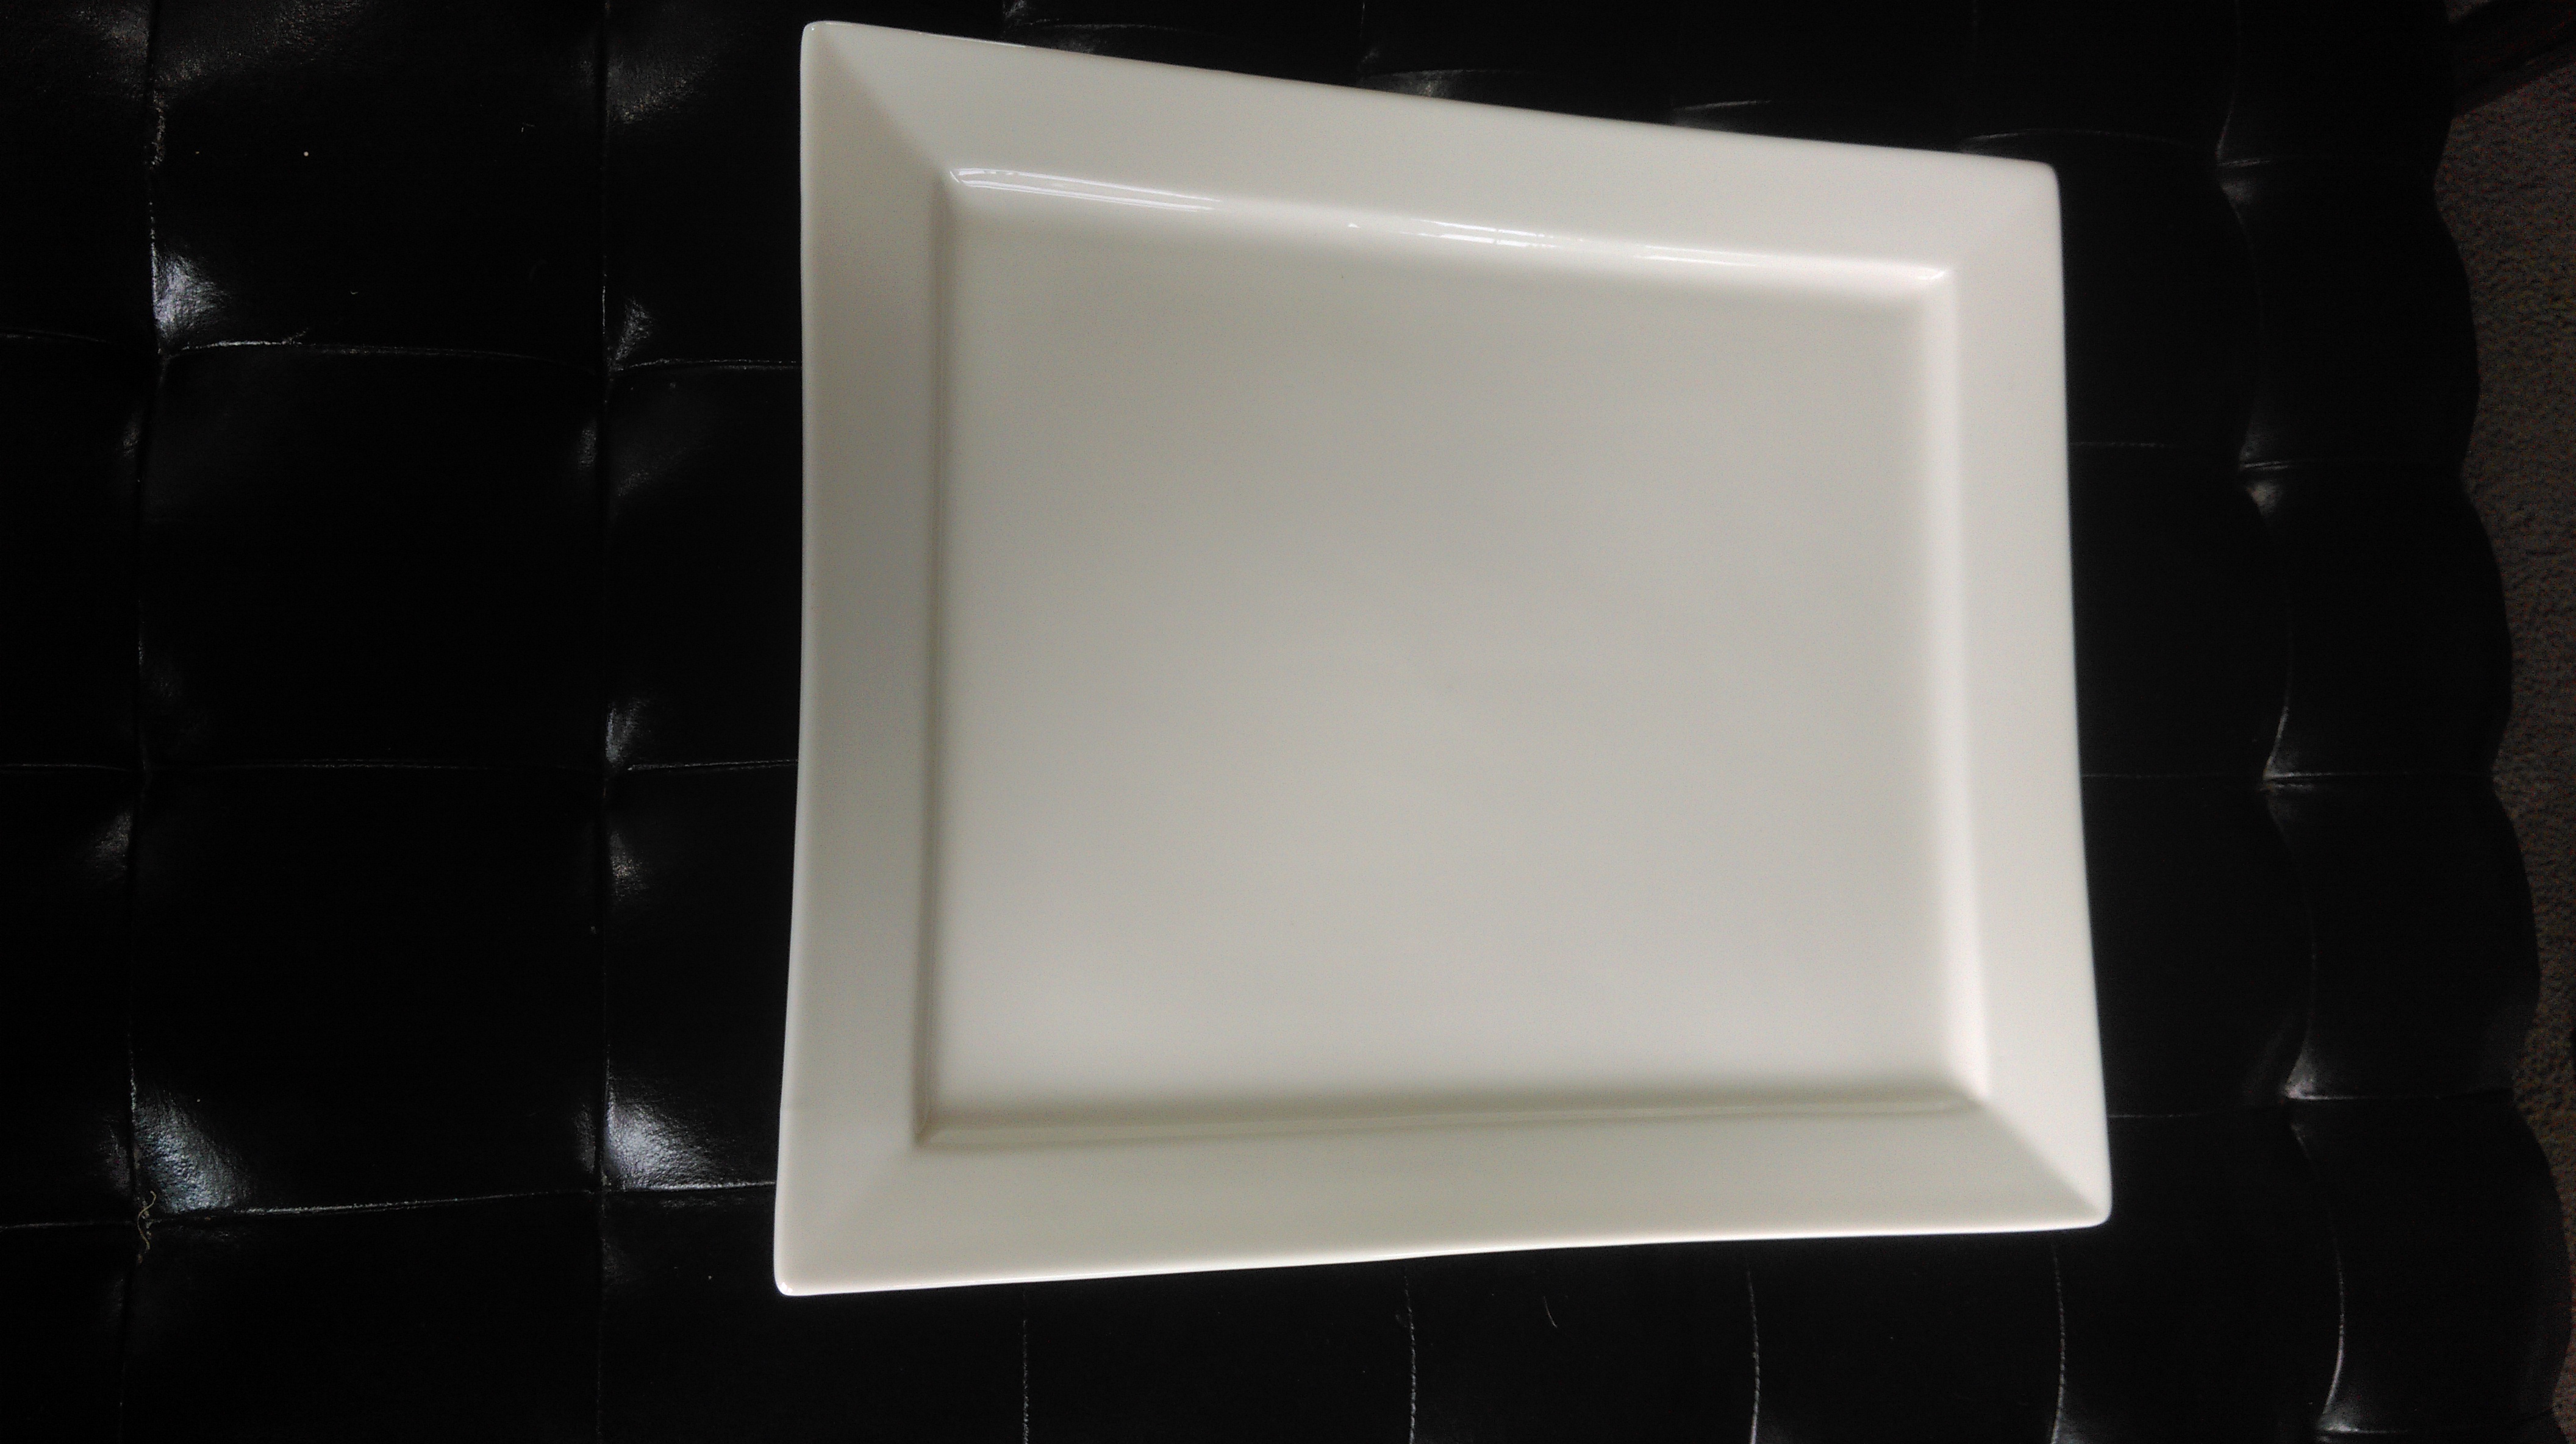 White China Serving Platter